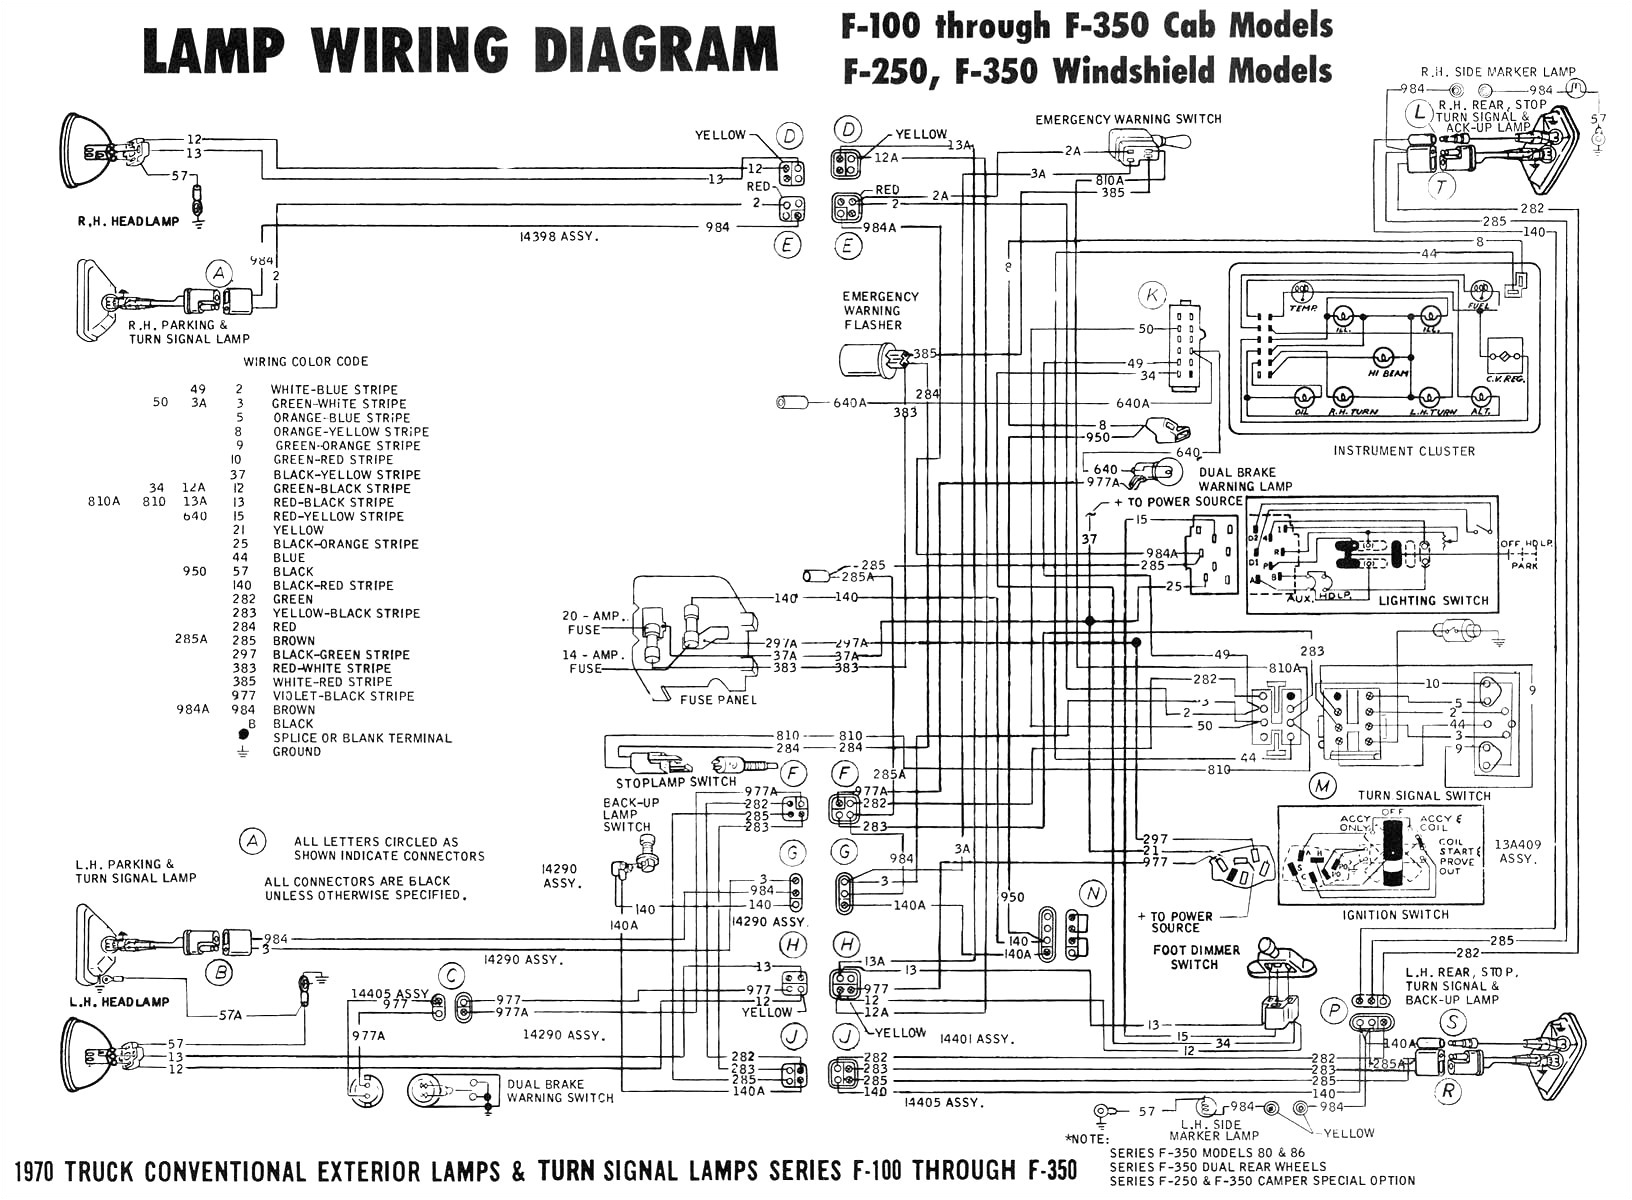 f8t00 cdi wiring diagrams yamaha 250 wiring diagram f8t00 cdi wiring diagrams yamaha 250